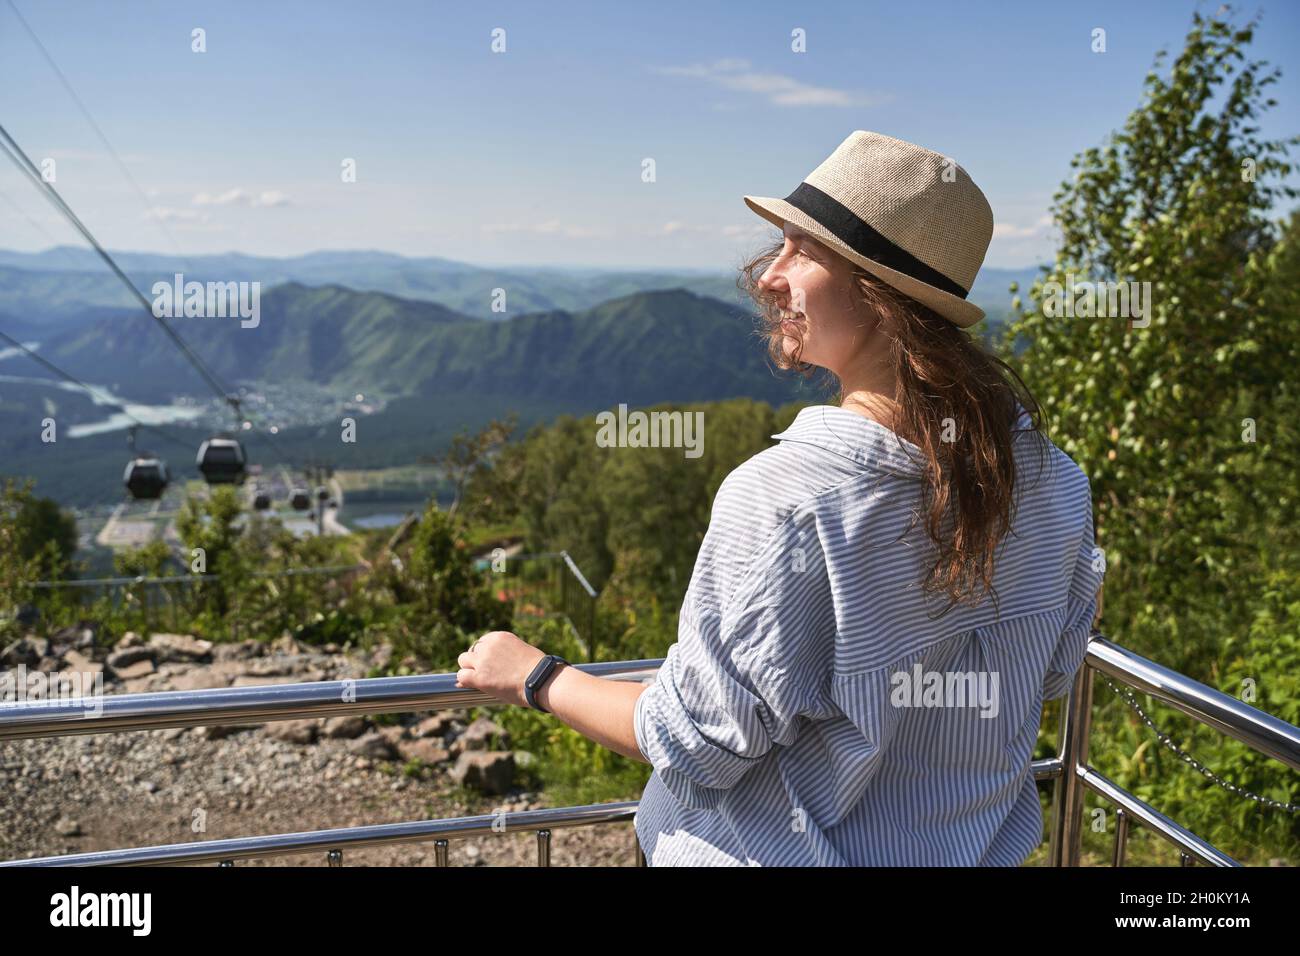 https://c8.alamy.com/compit/2h0ky1a/donna-da-viaggio-in-cappello-trekking-in-montagna-hipster-viaggio-2h0ky1a.jpg